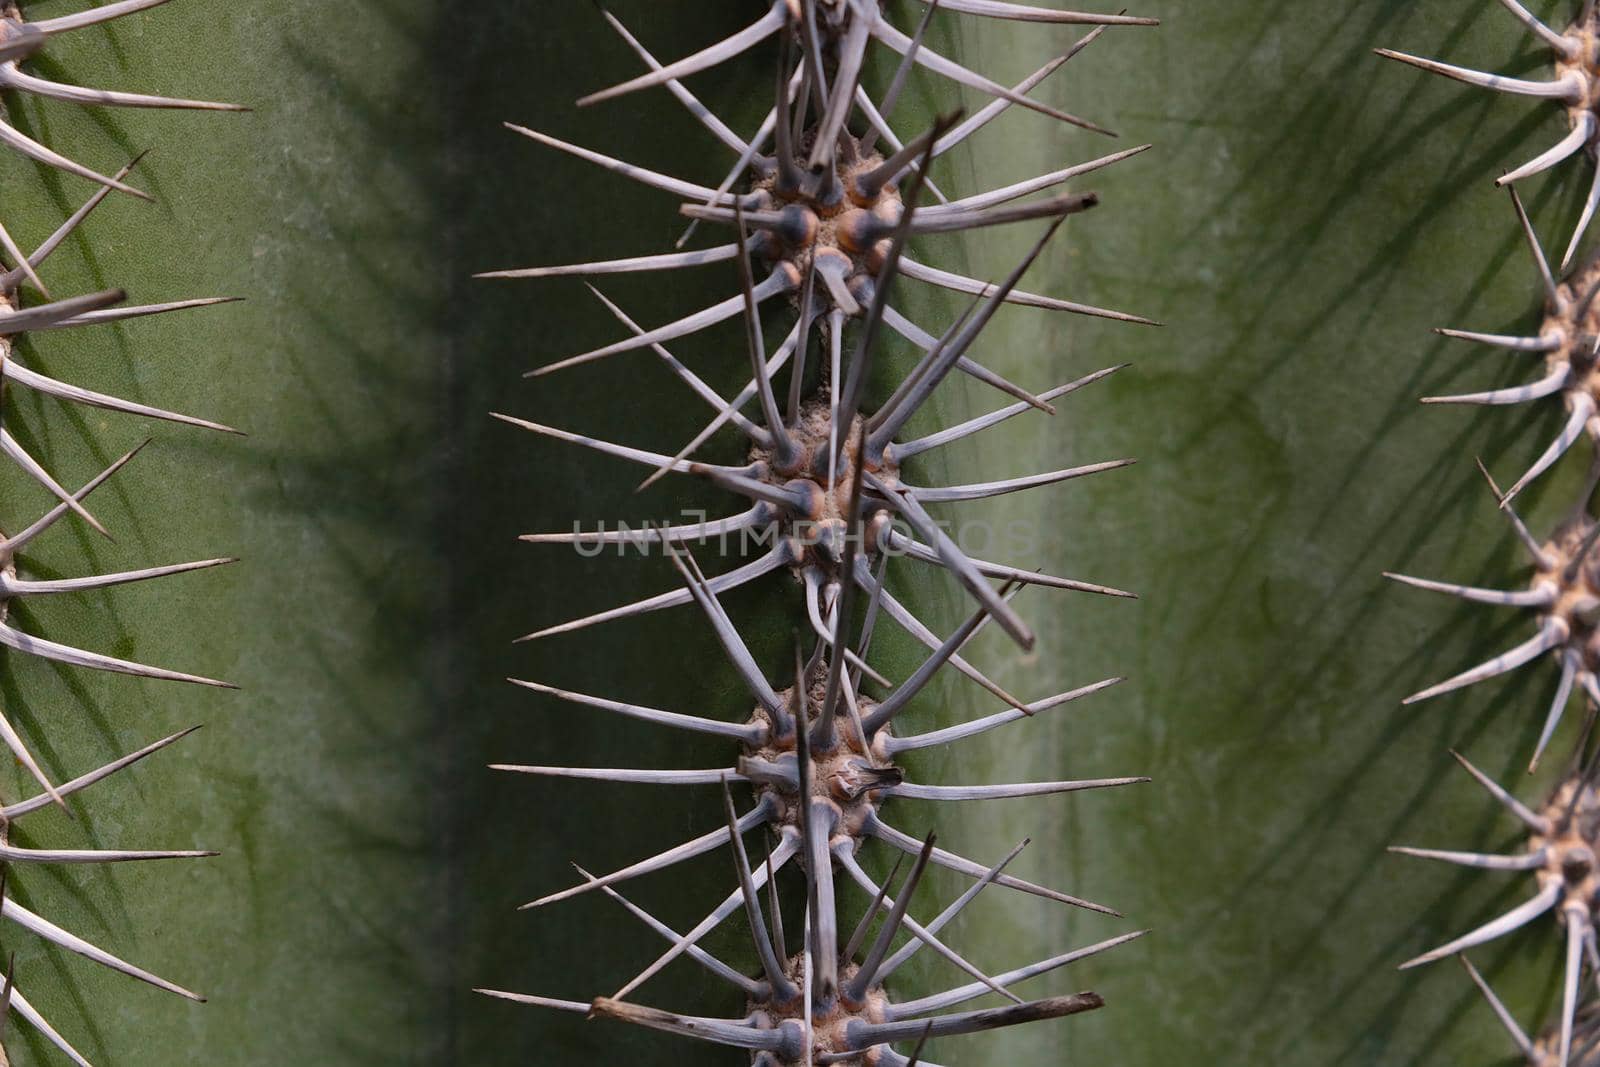 Close up of large cactus needles